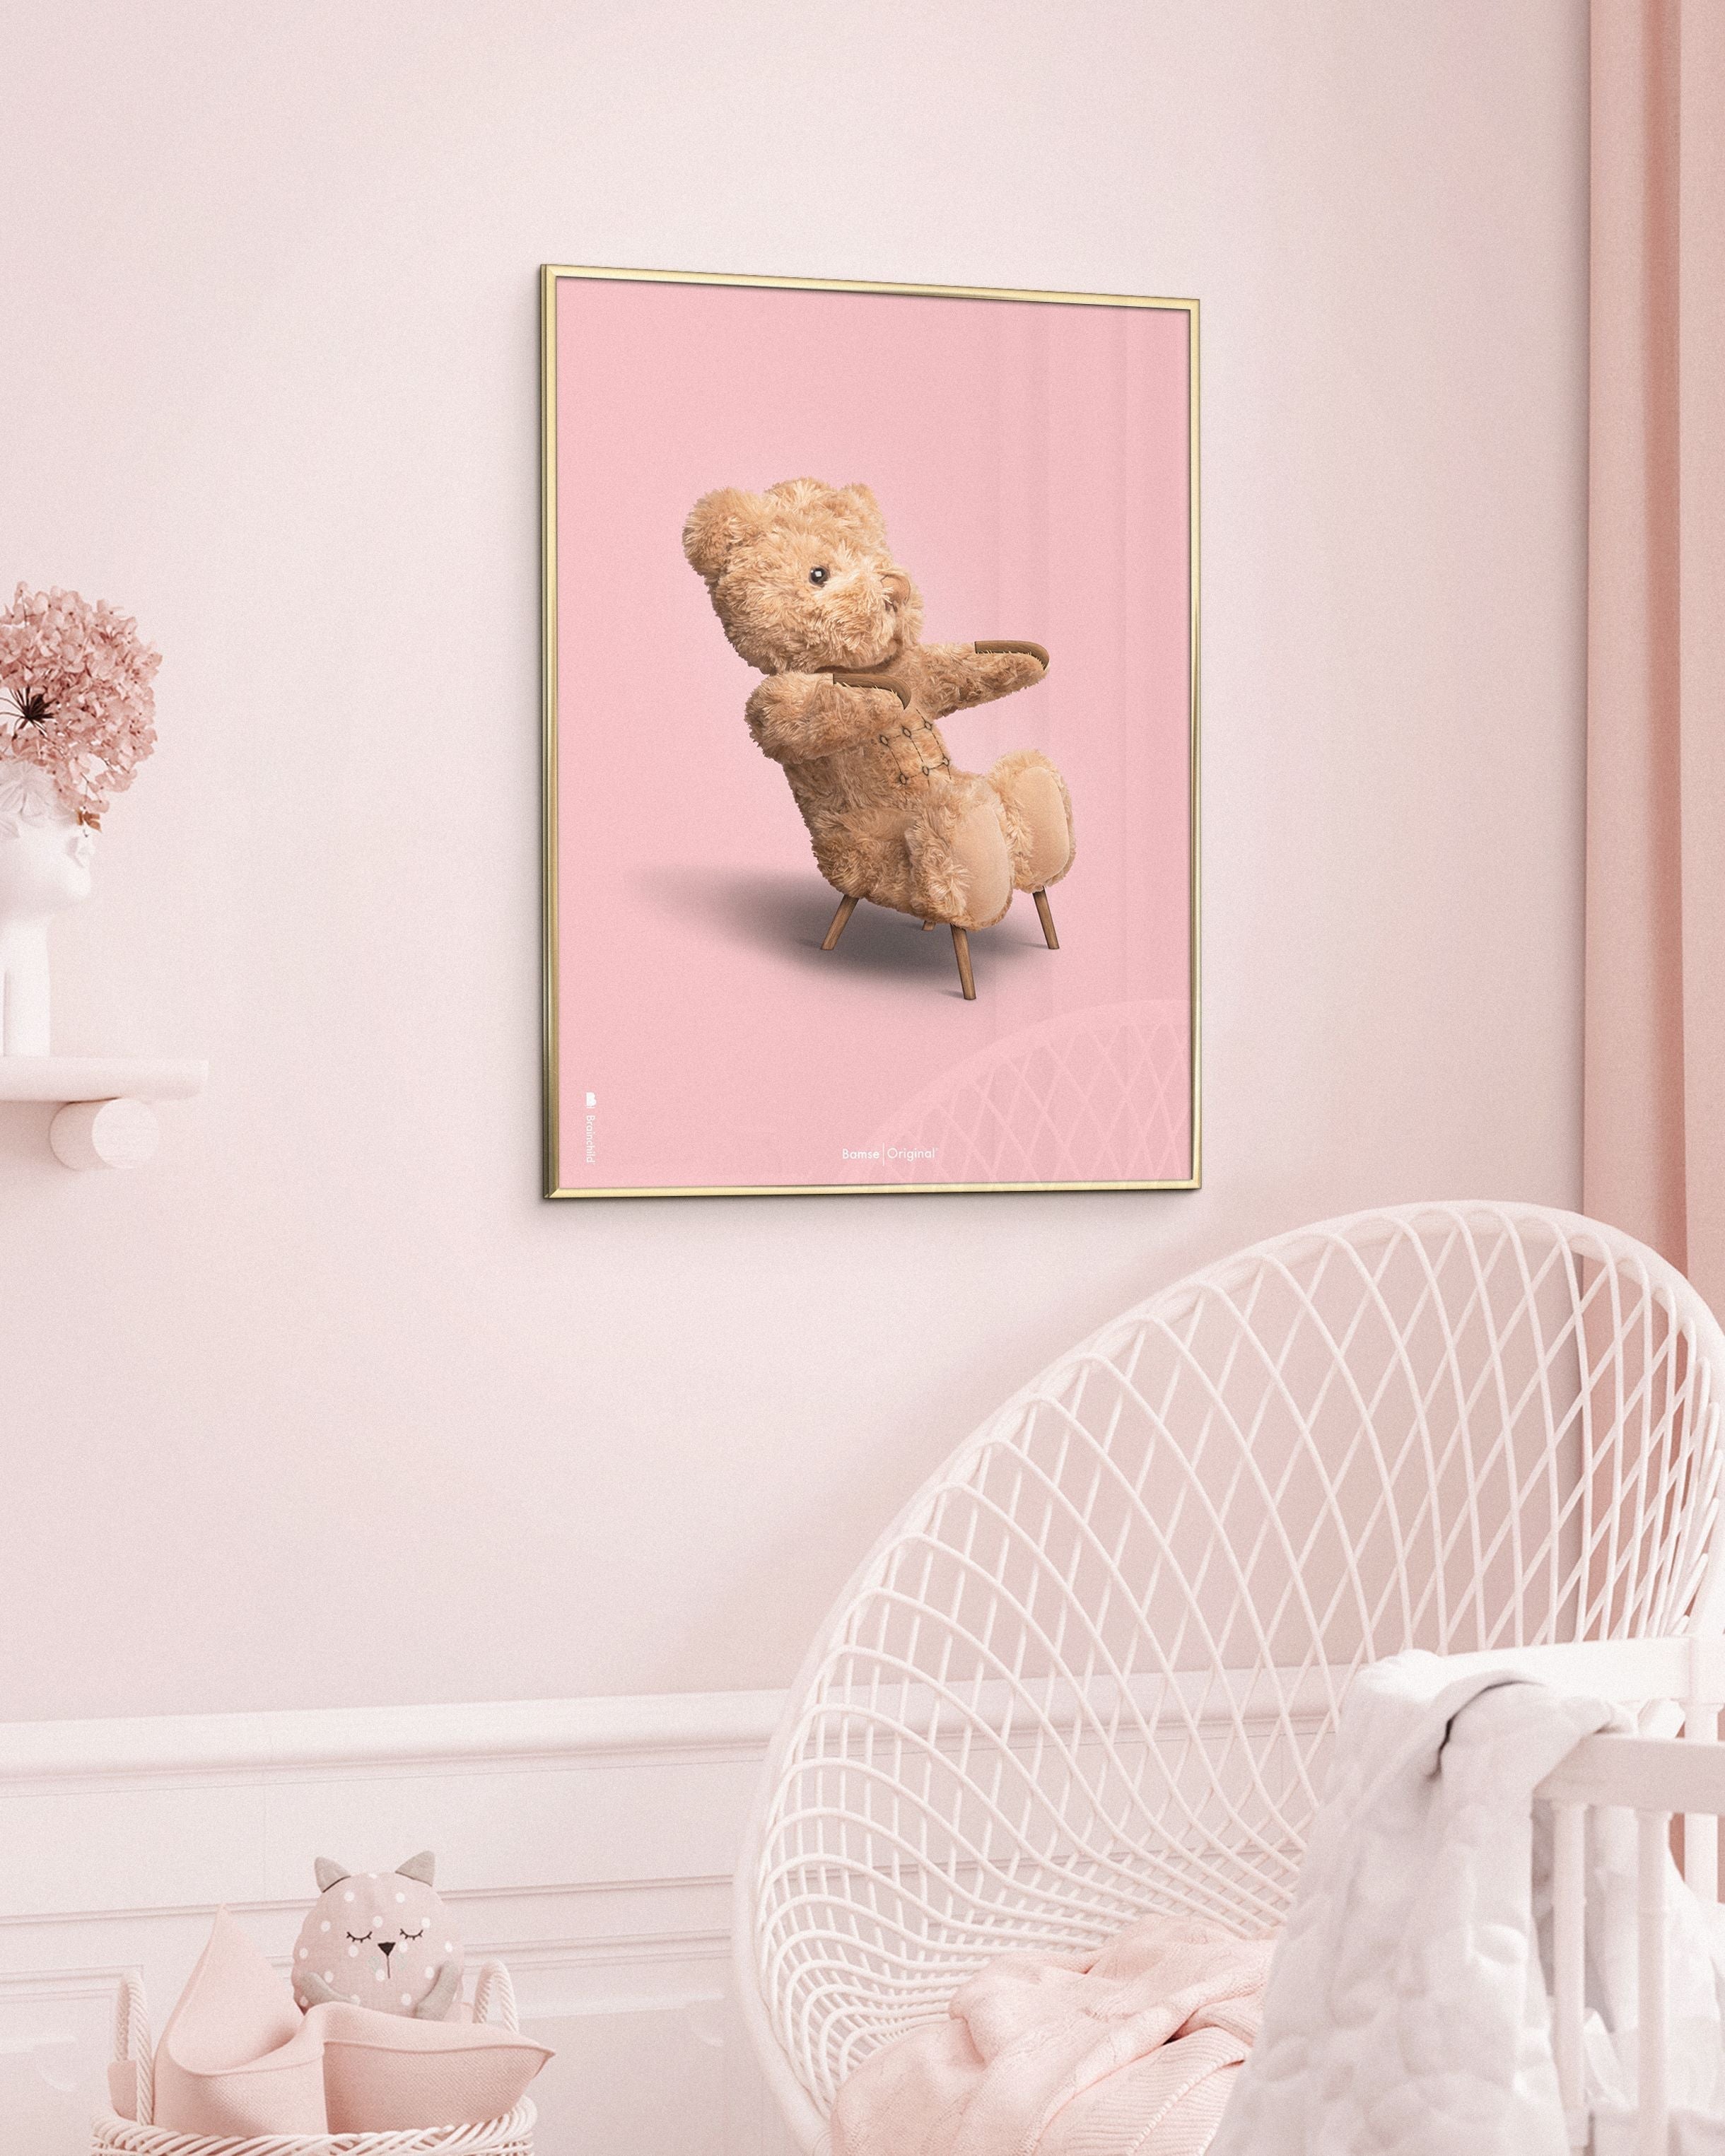 Brainchild Teddybär Classic Poster Messingfarbener Rahmen 70x100 Cm, Rosa Hintergrund